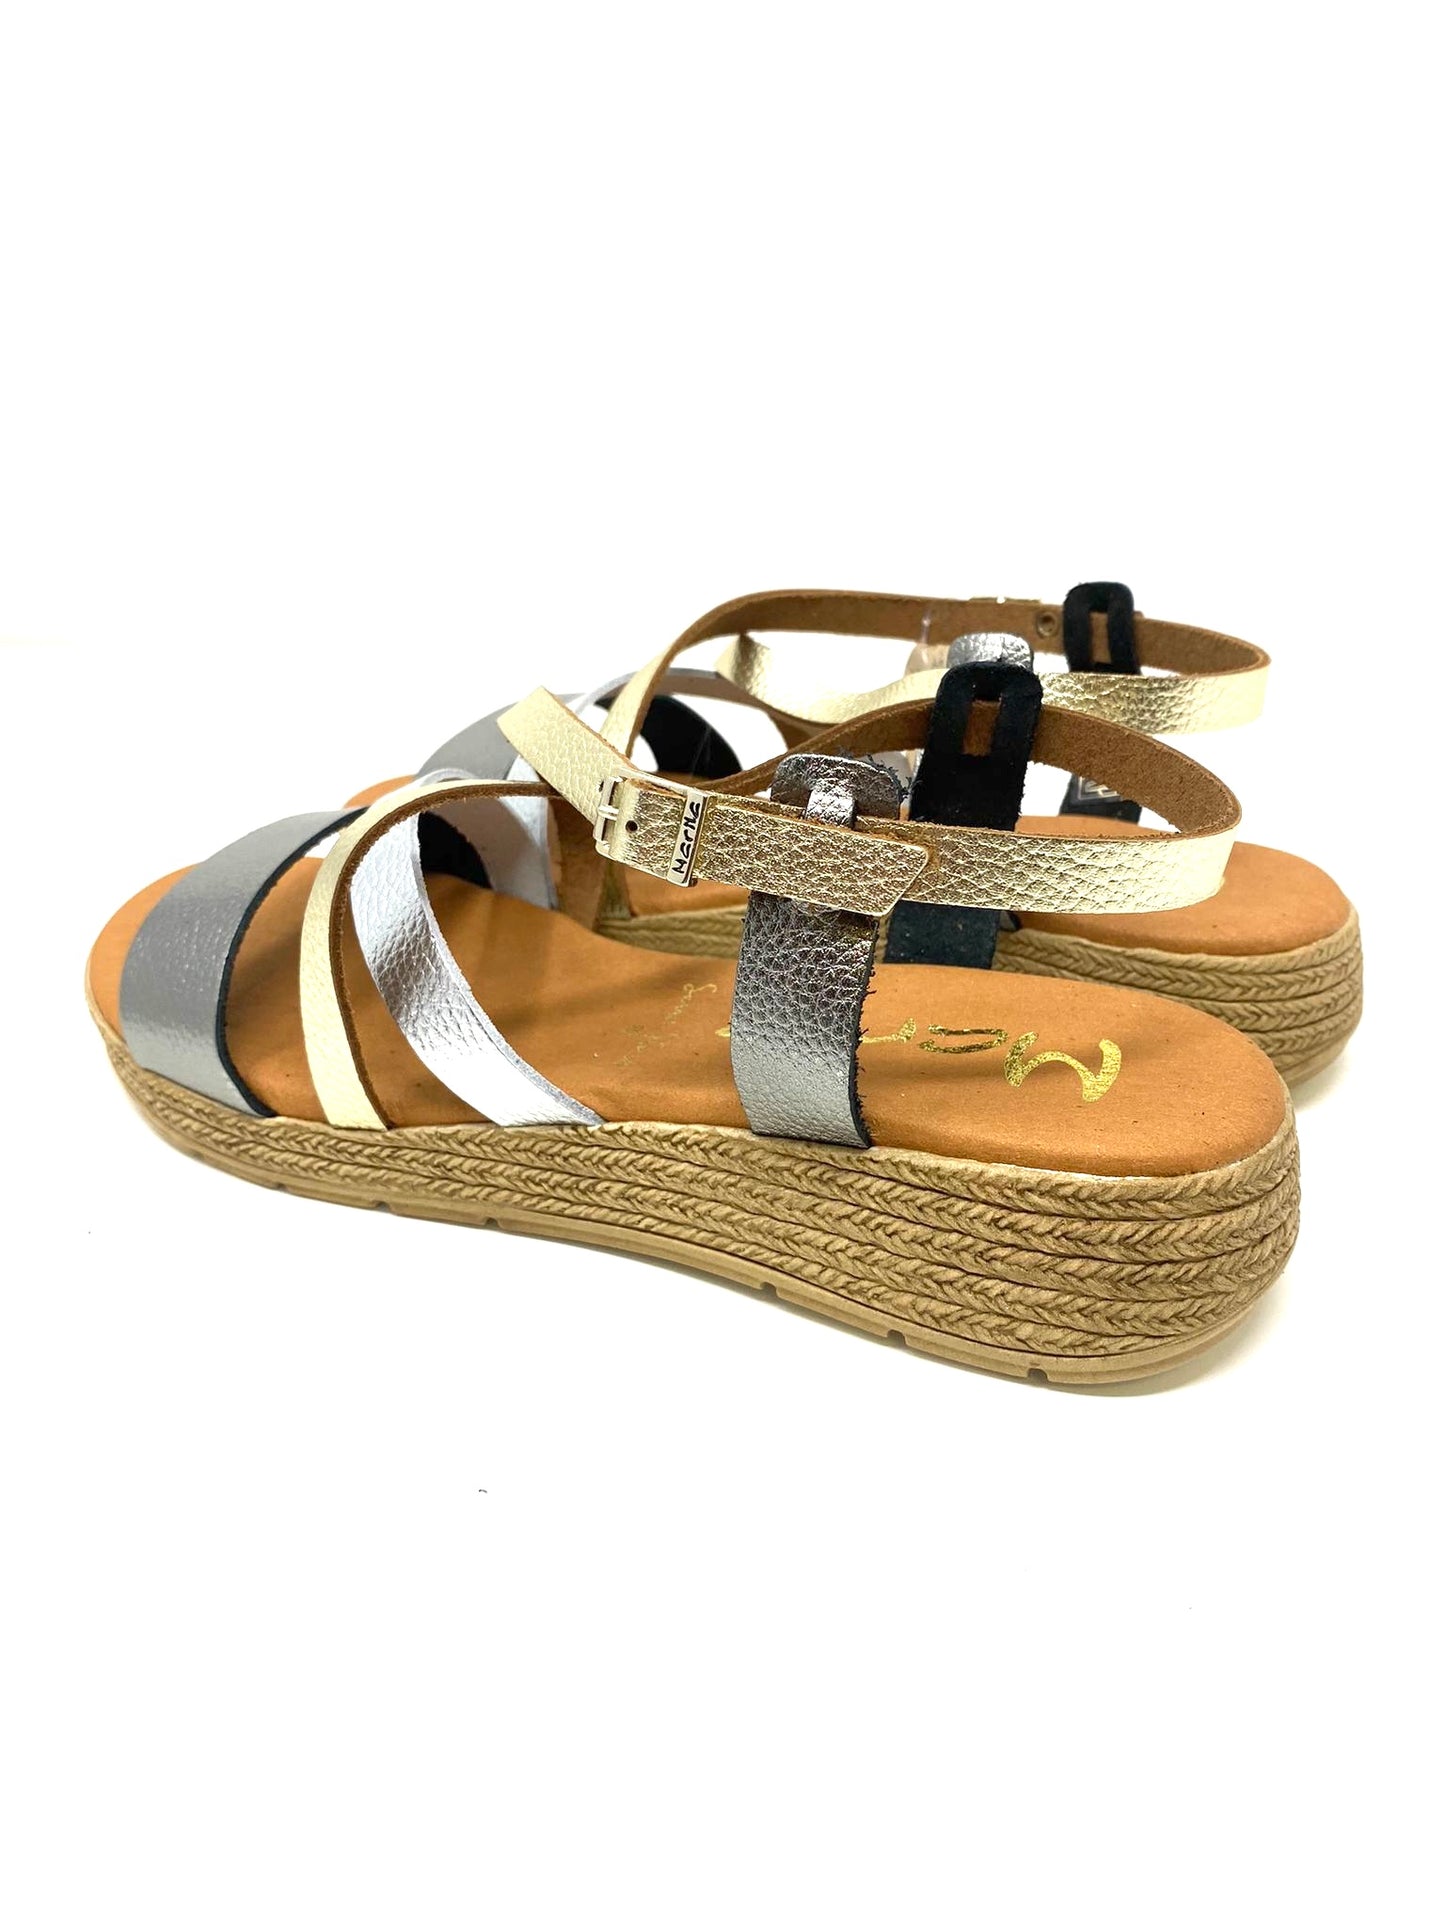 Marila Doma grain leather multi metal sandal